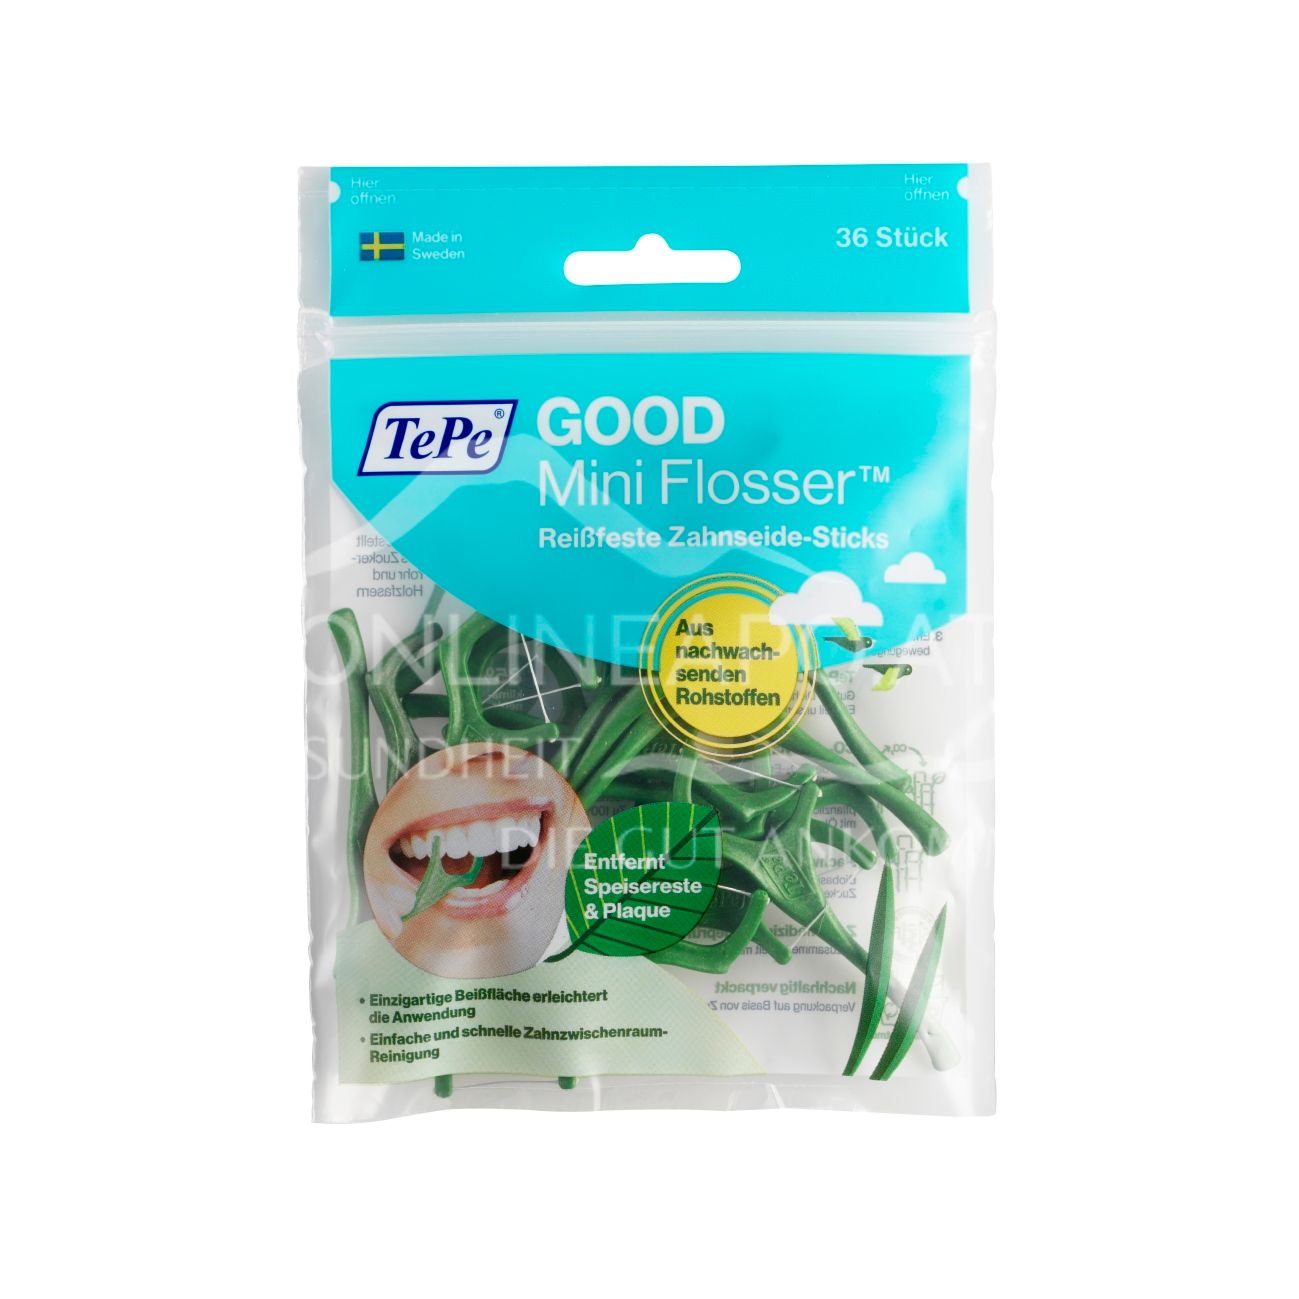 TePe GOOD Mini Flosser™ Zahnseide